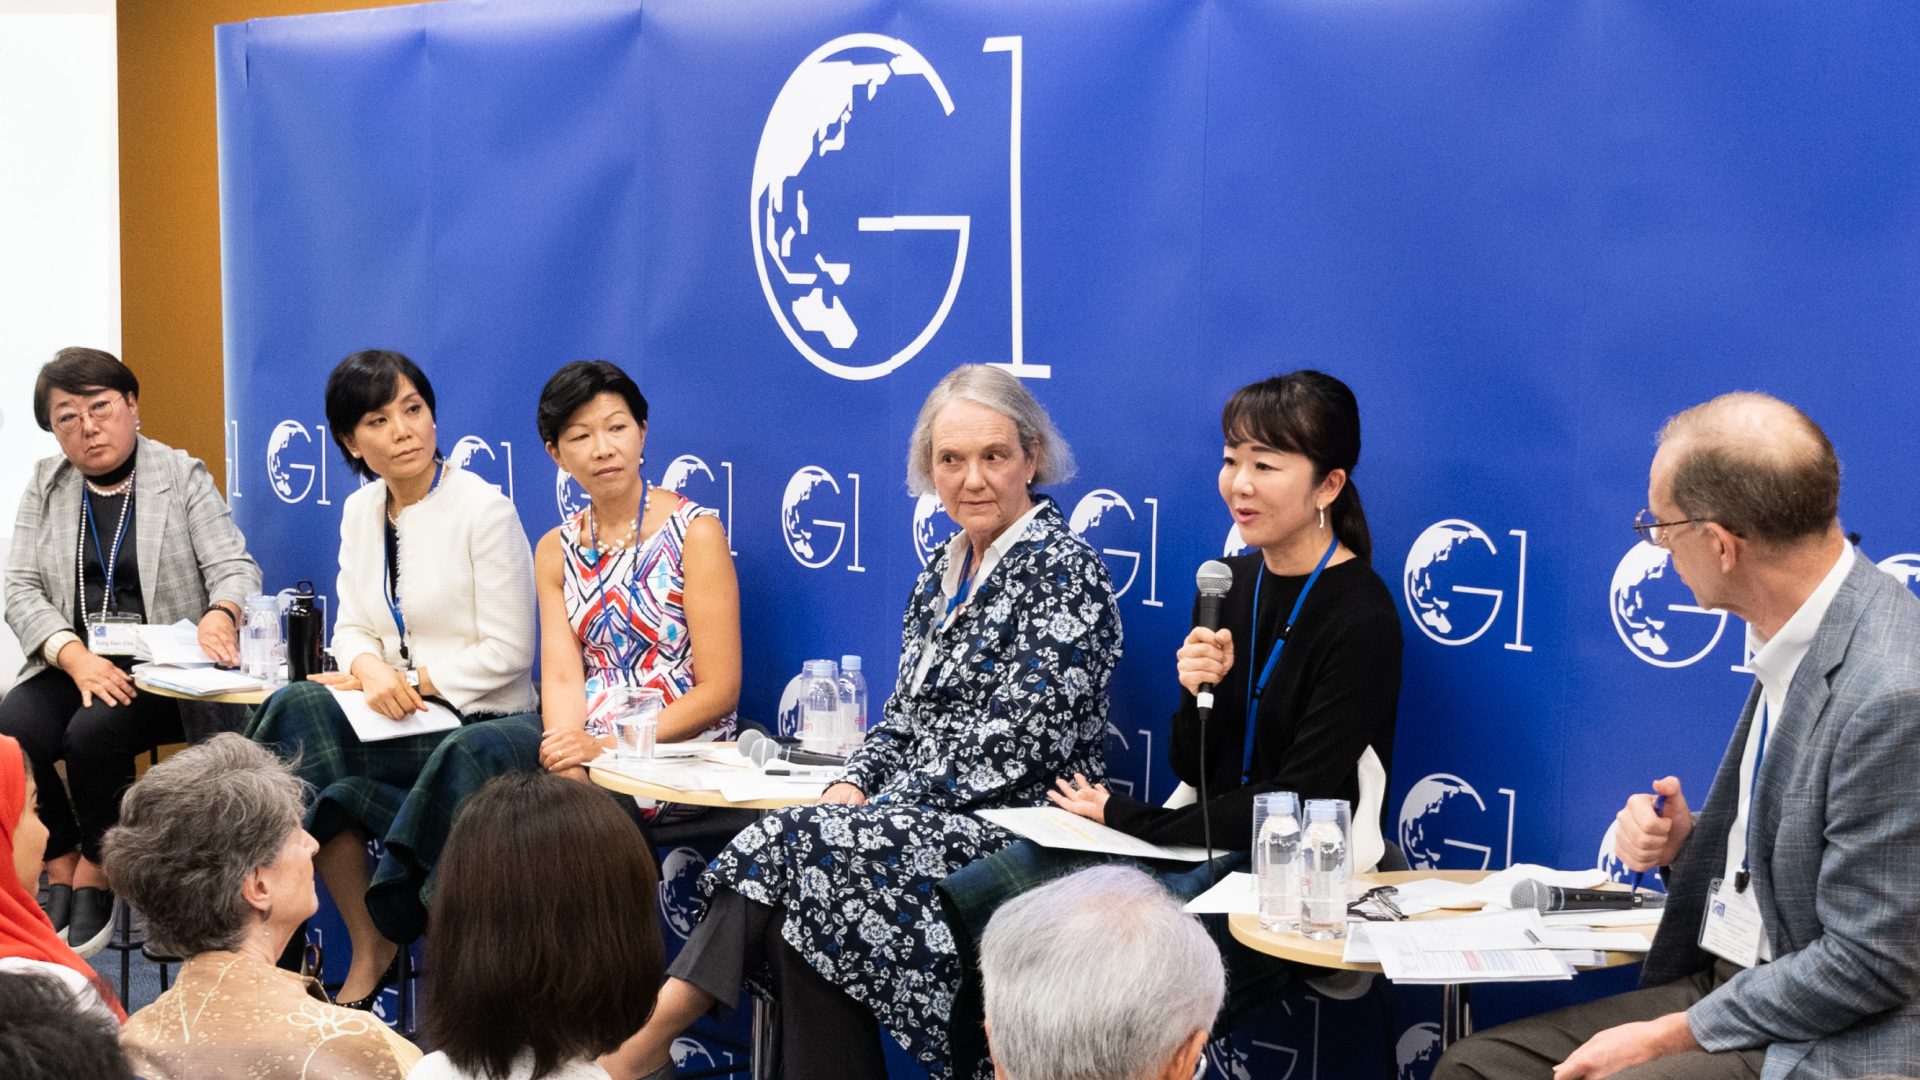 Womenomics and Gender Equality in Entrepreneurship (G1 Global 2019)